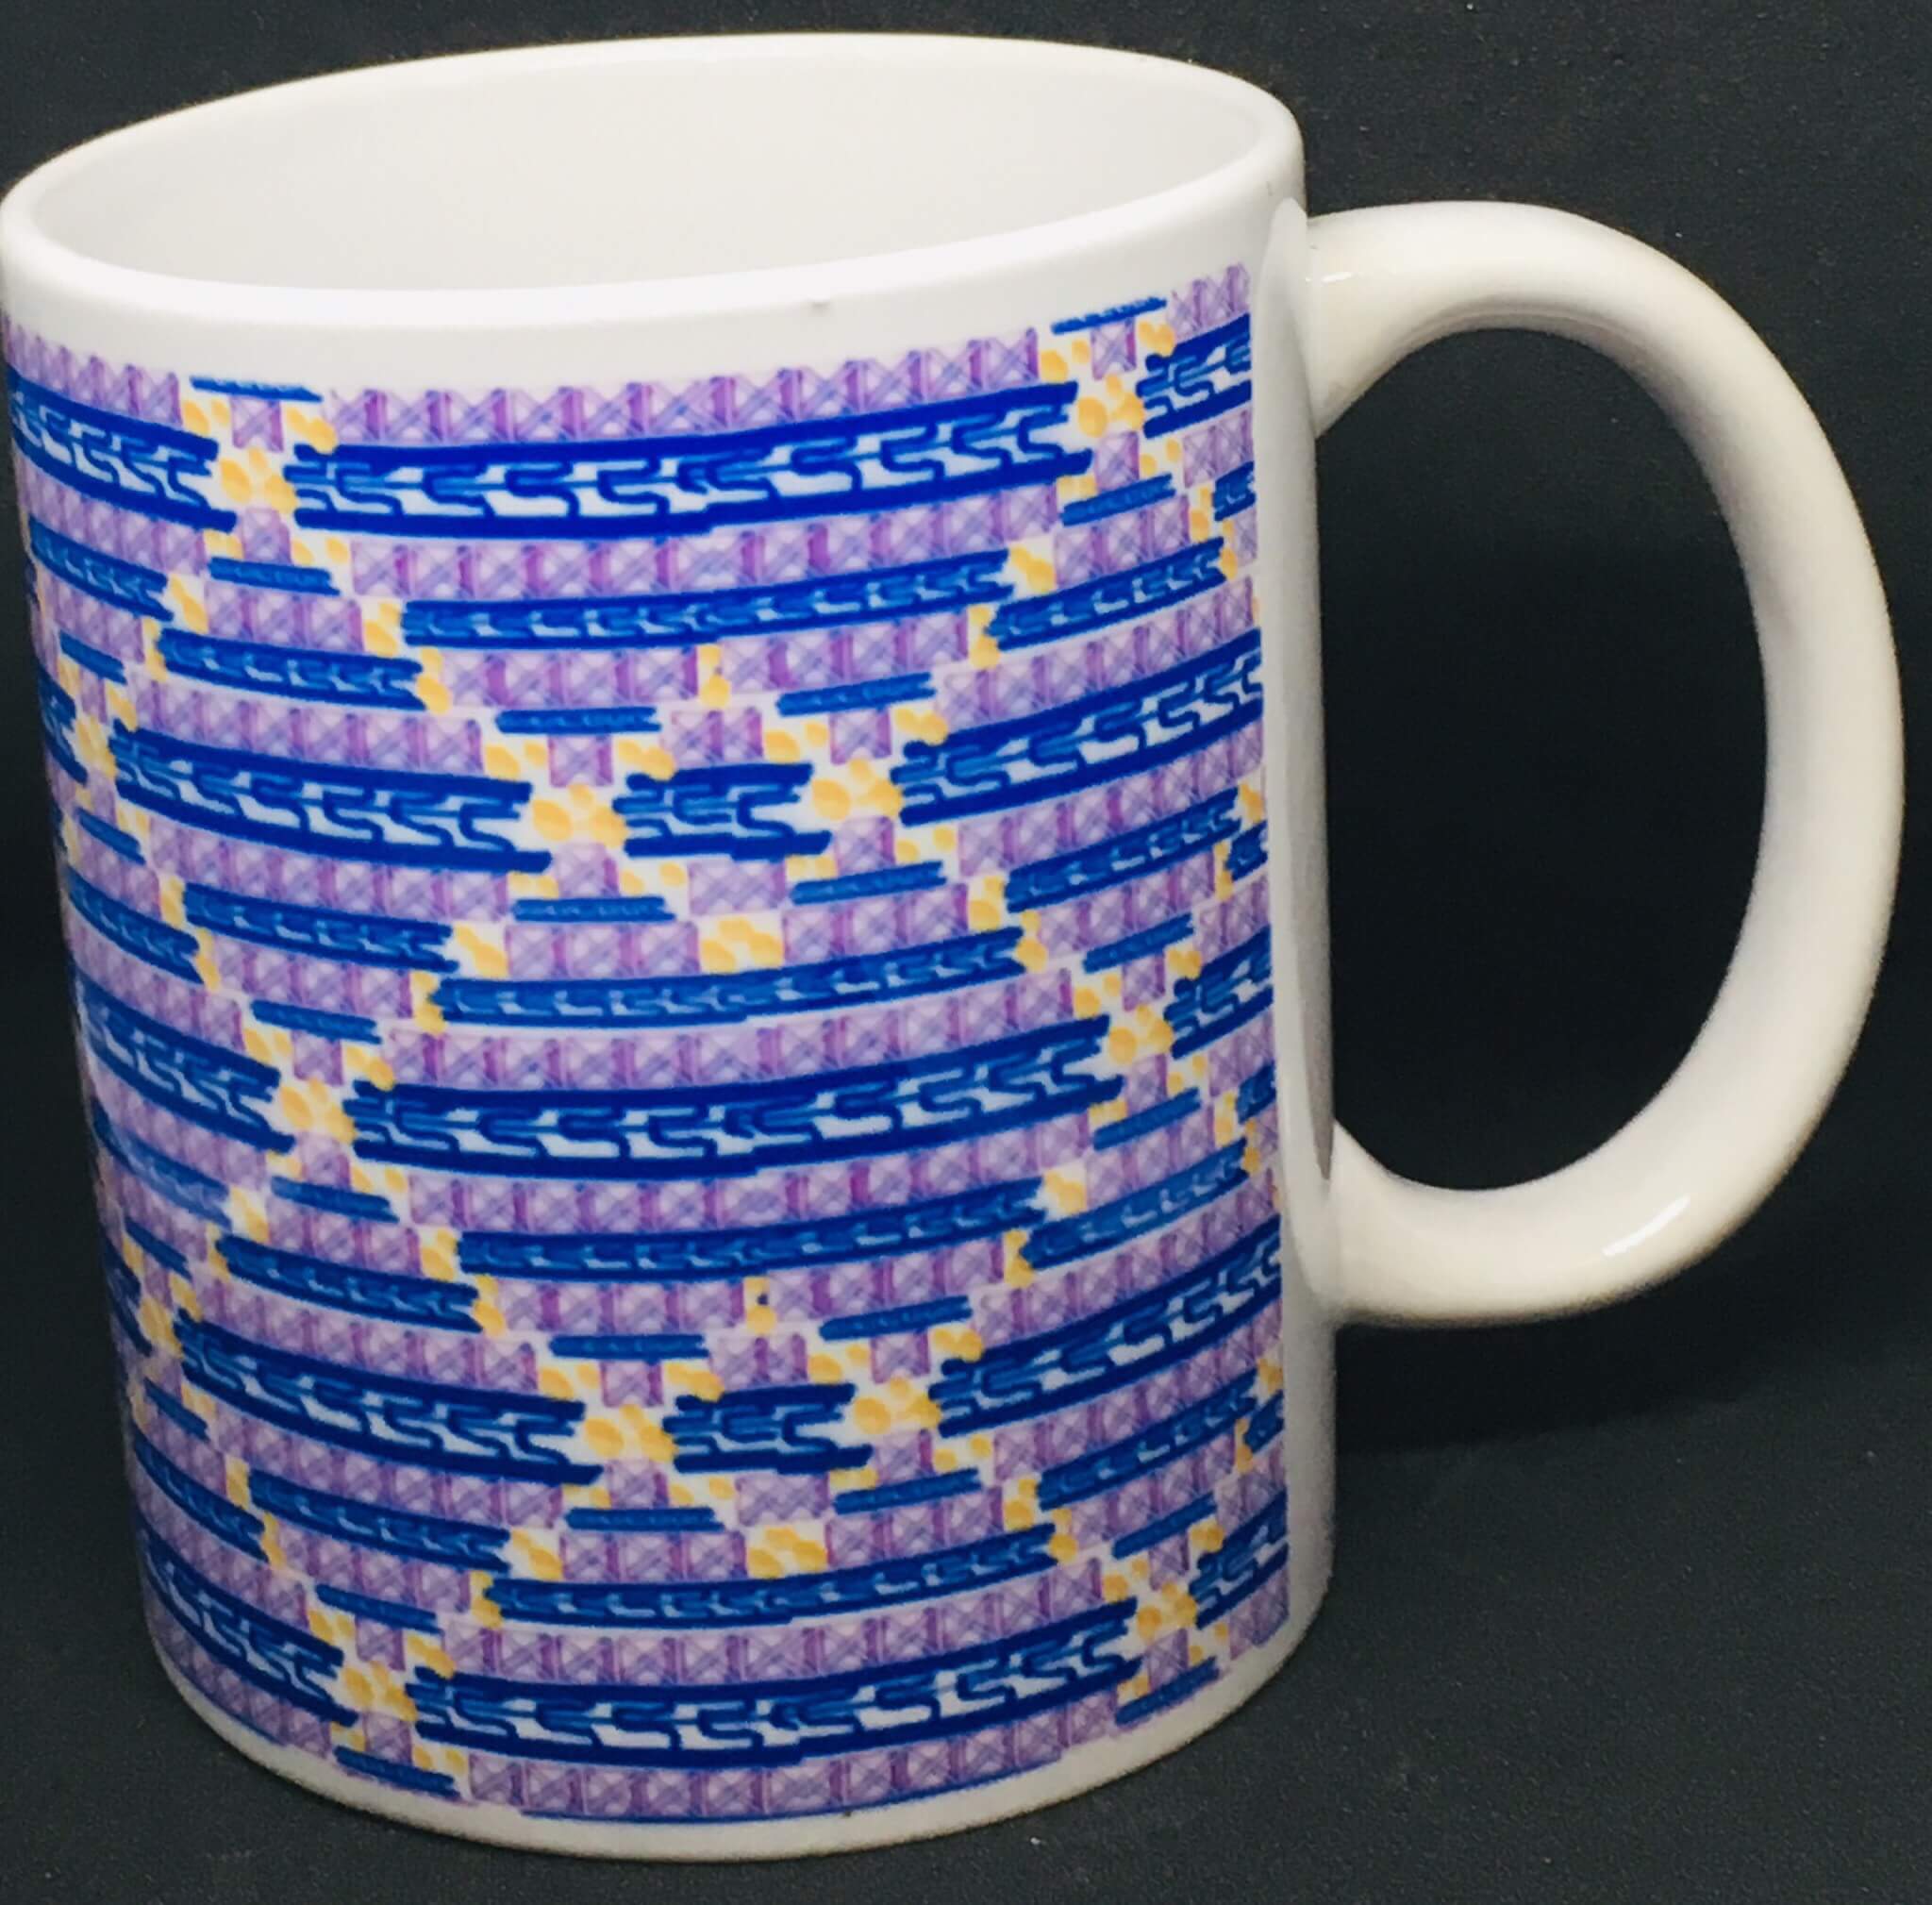 Coffee mug design with geometric shapes and lines